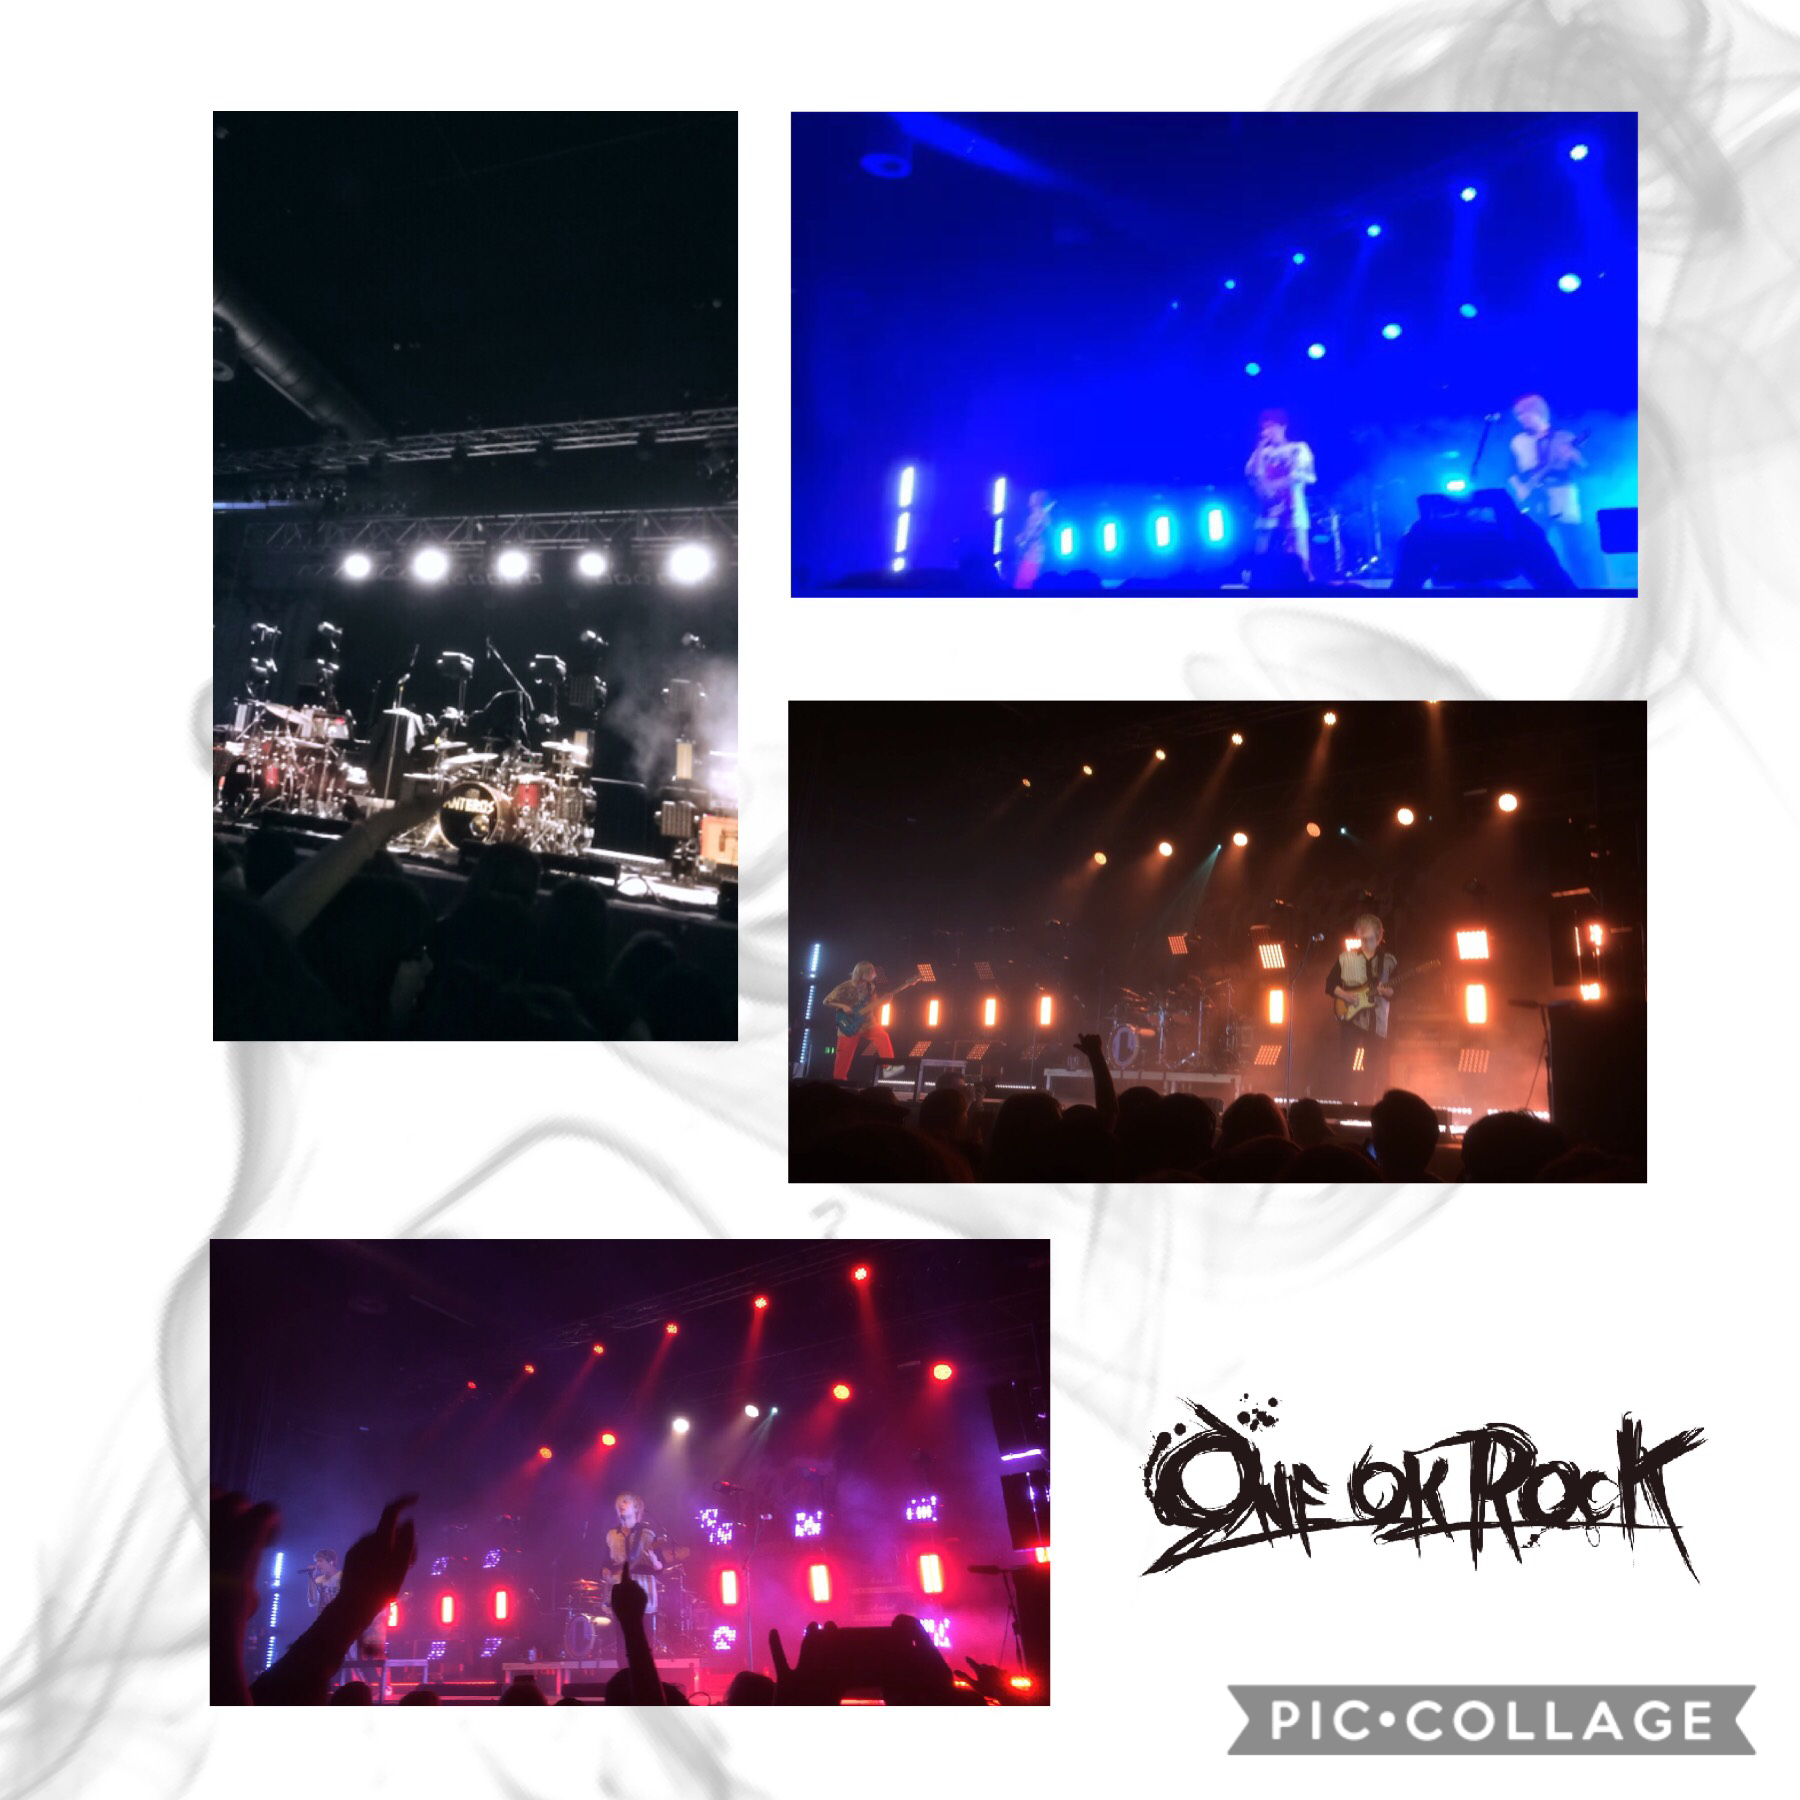 ONE OK ROCK Concert ... it was soooo great ... had a lot of fun 